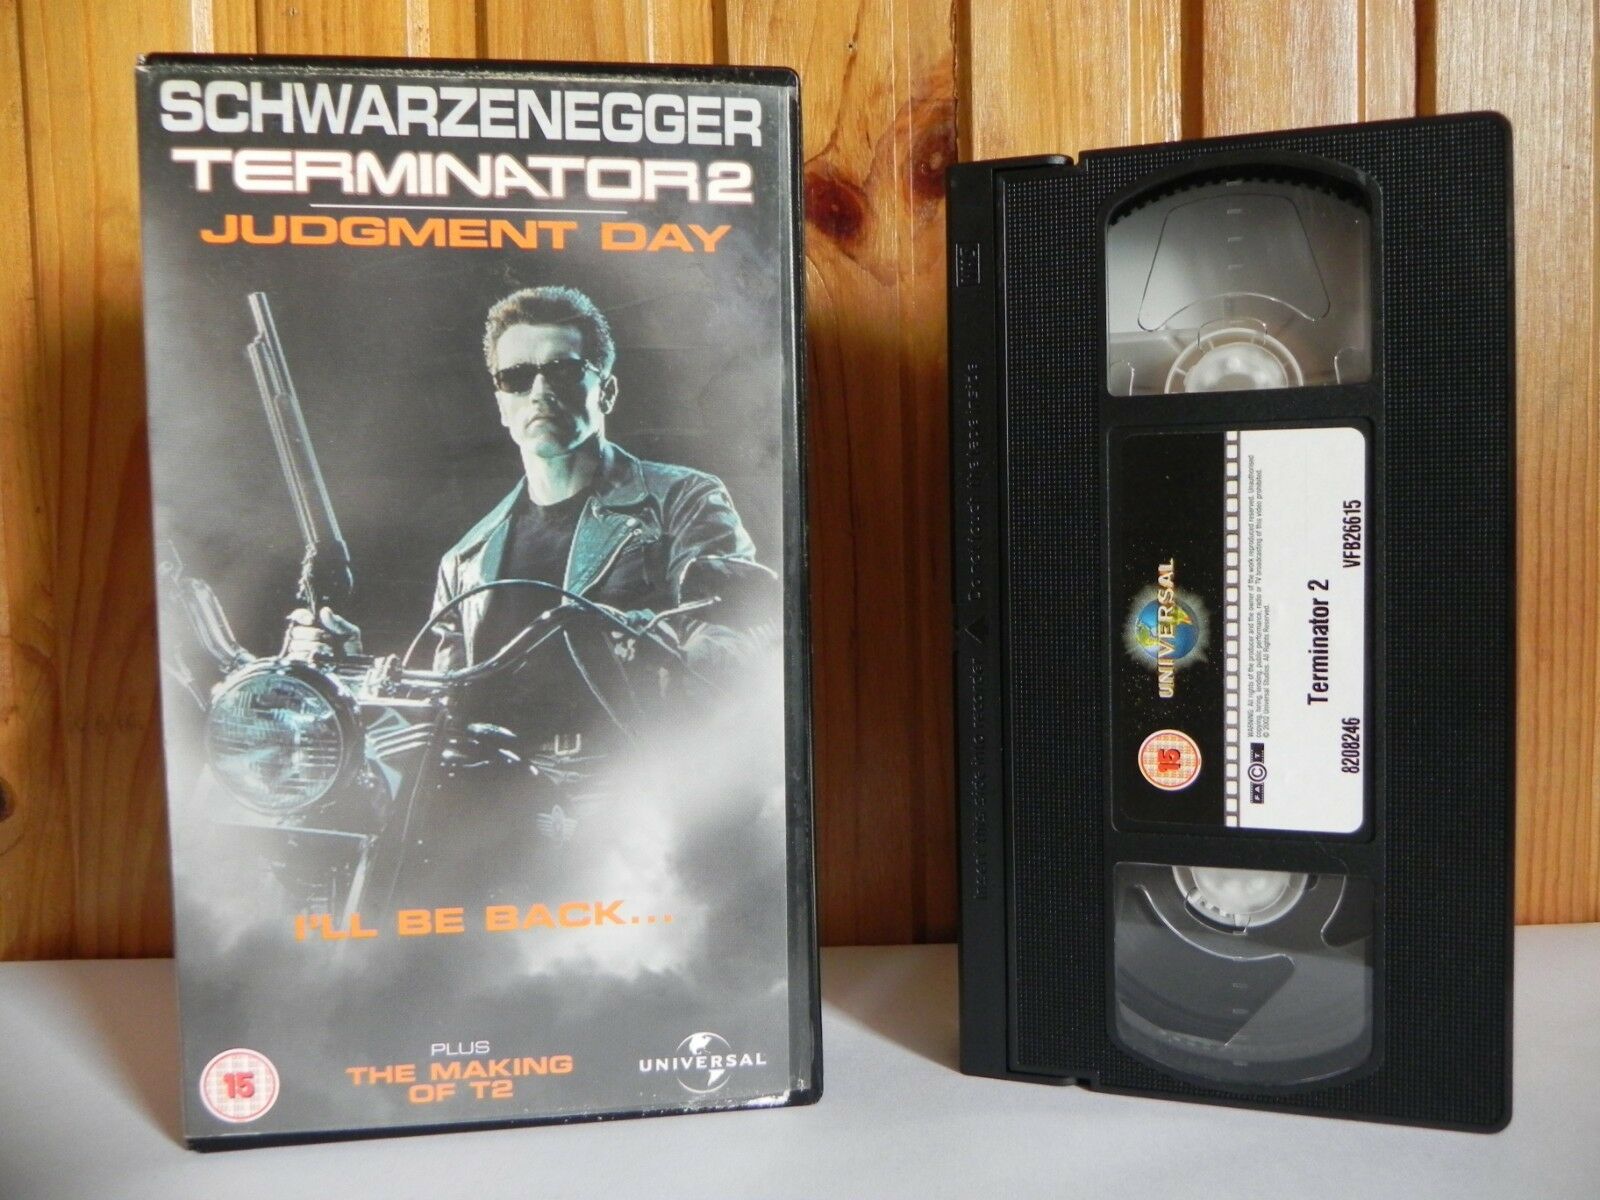 Terminator 2: Judgment Day - Universal - Sci-Fi Classic - Schwarzenegger - VHS-